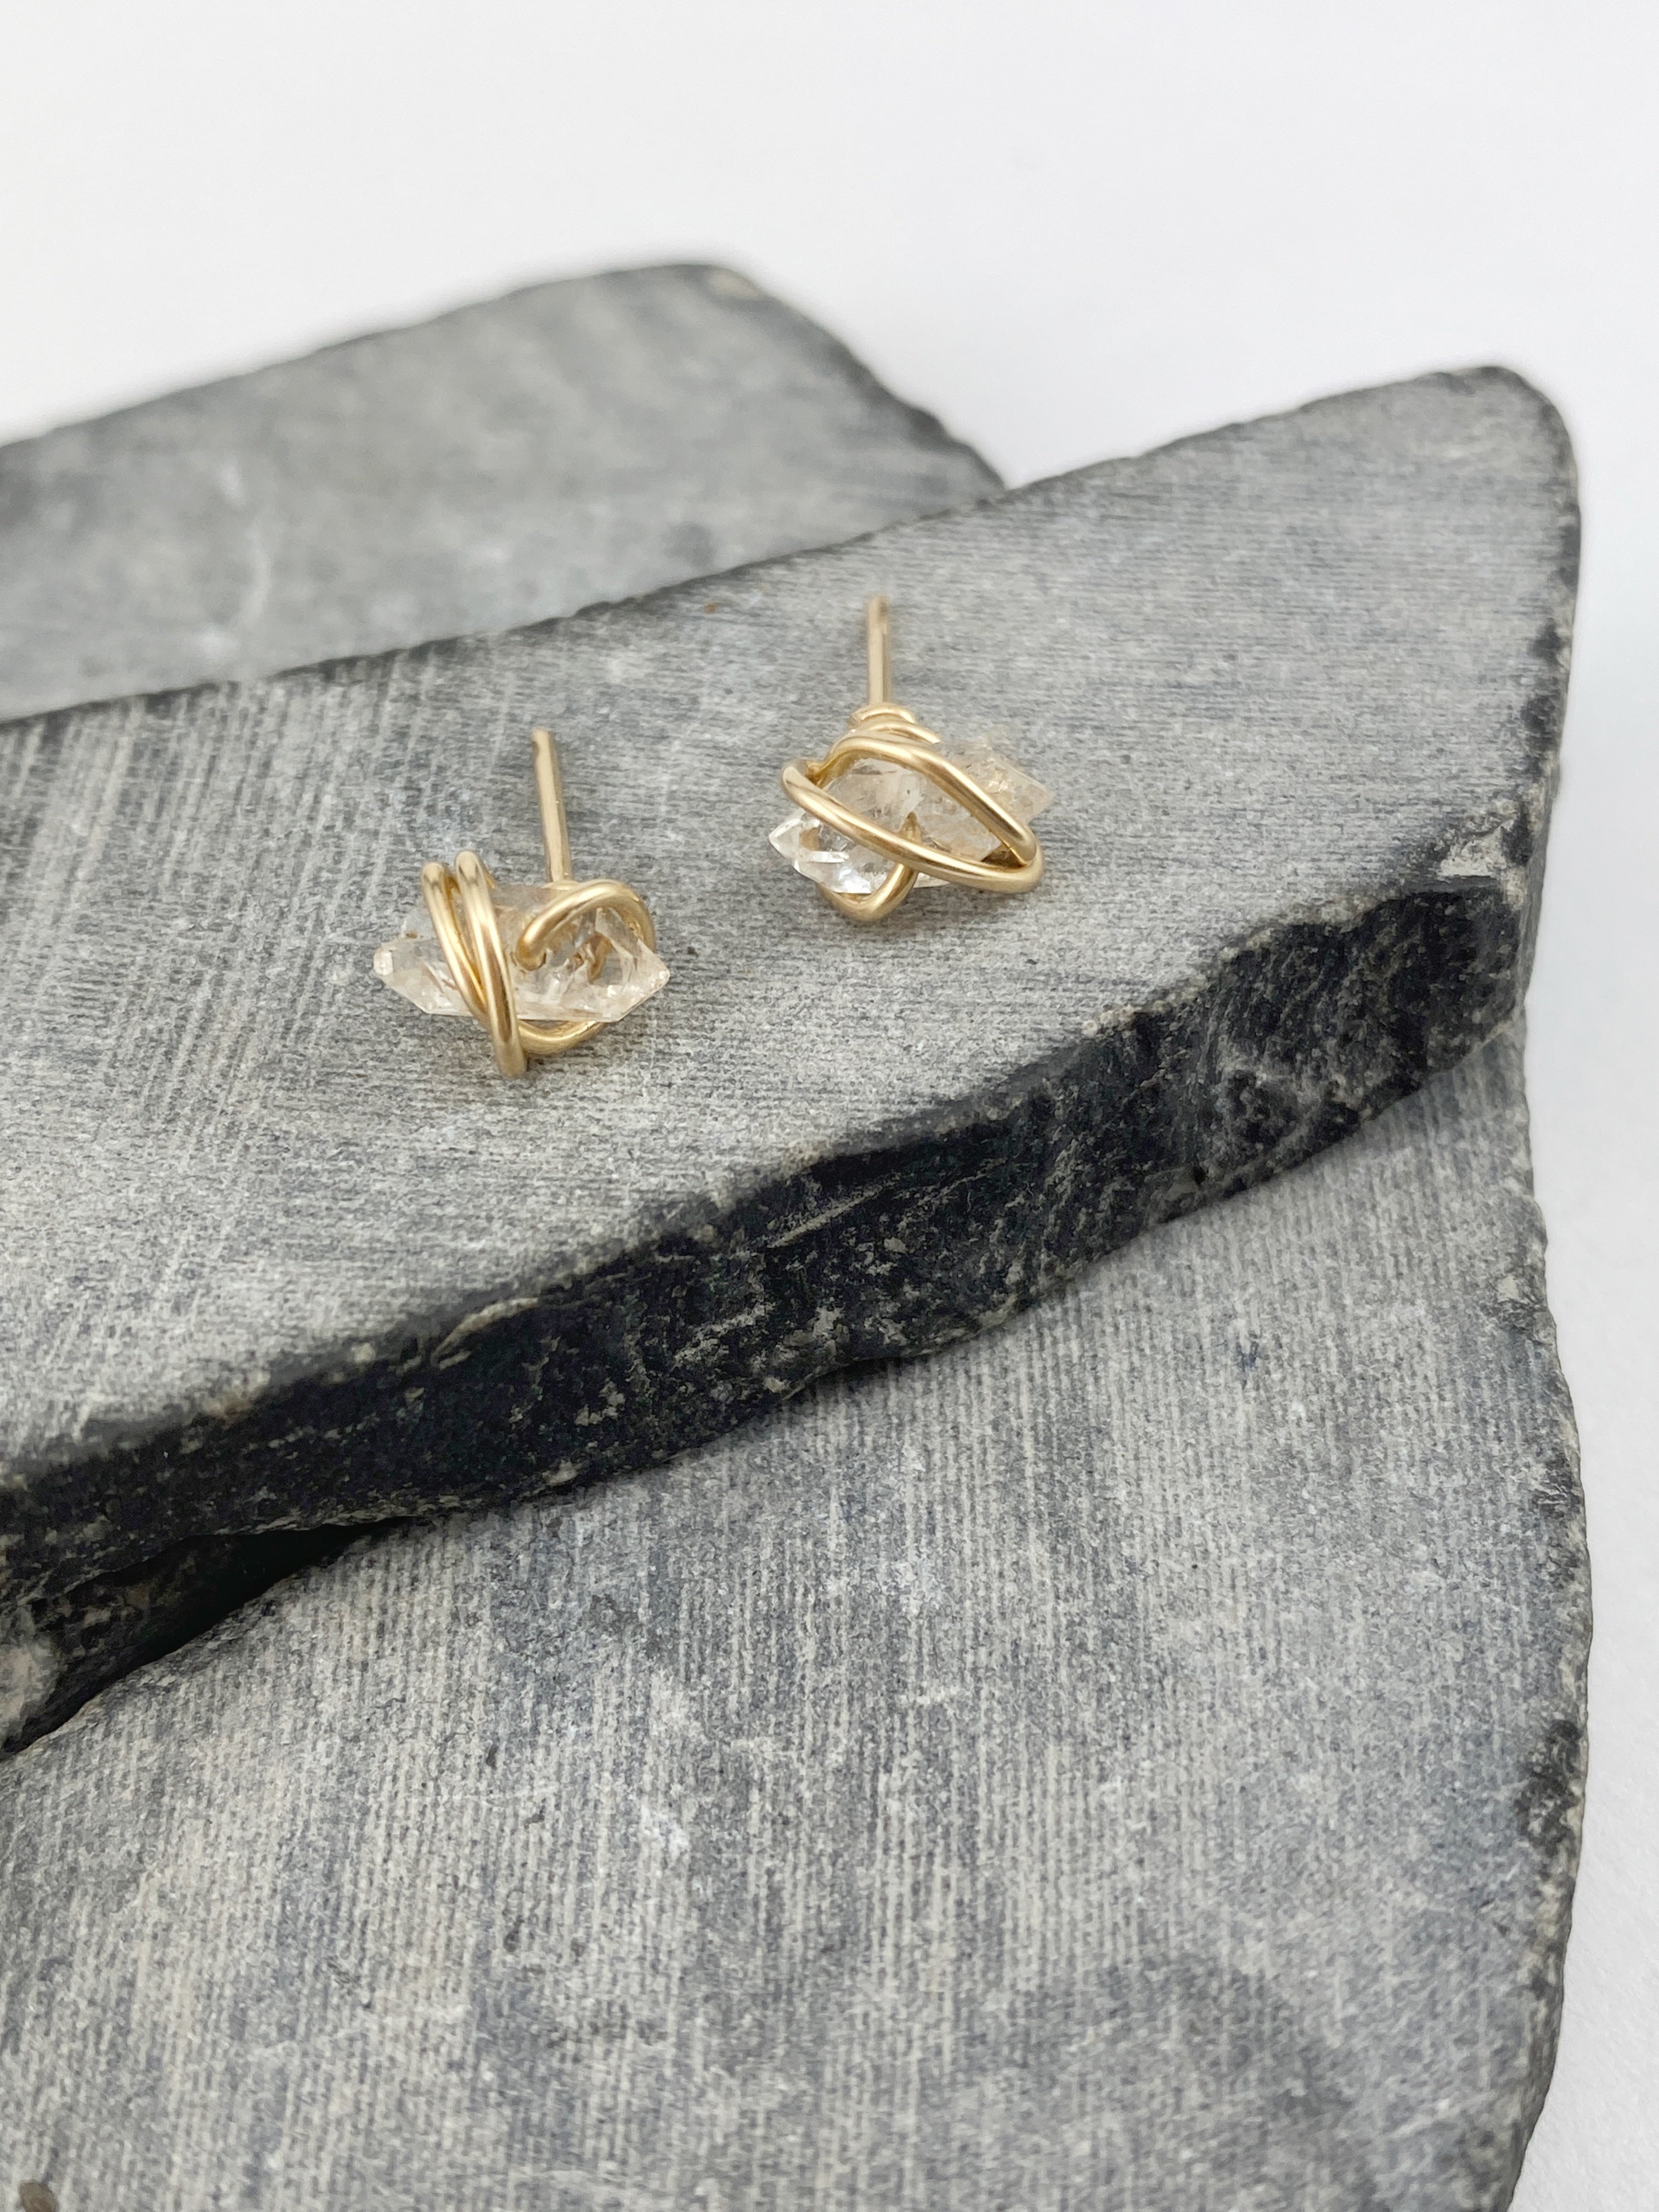 Rachel- Dawn- Design-herkimer-diamond-stud-earrings-gold-wrap